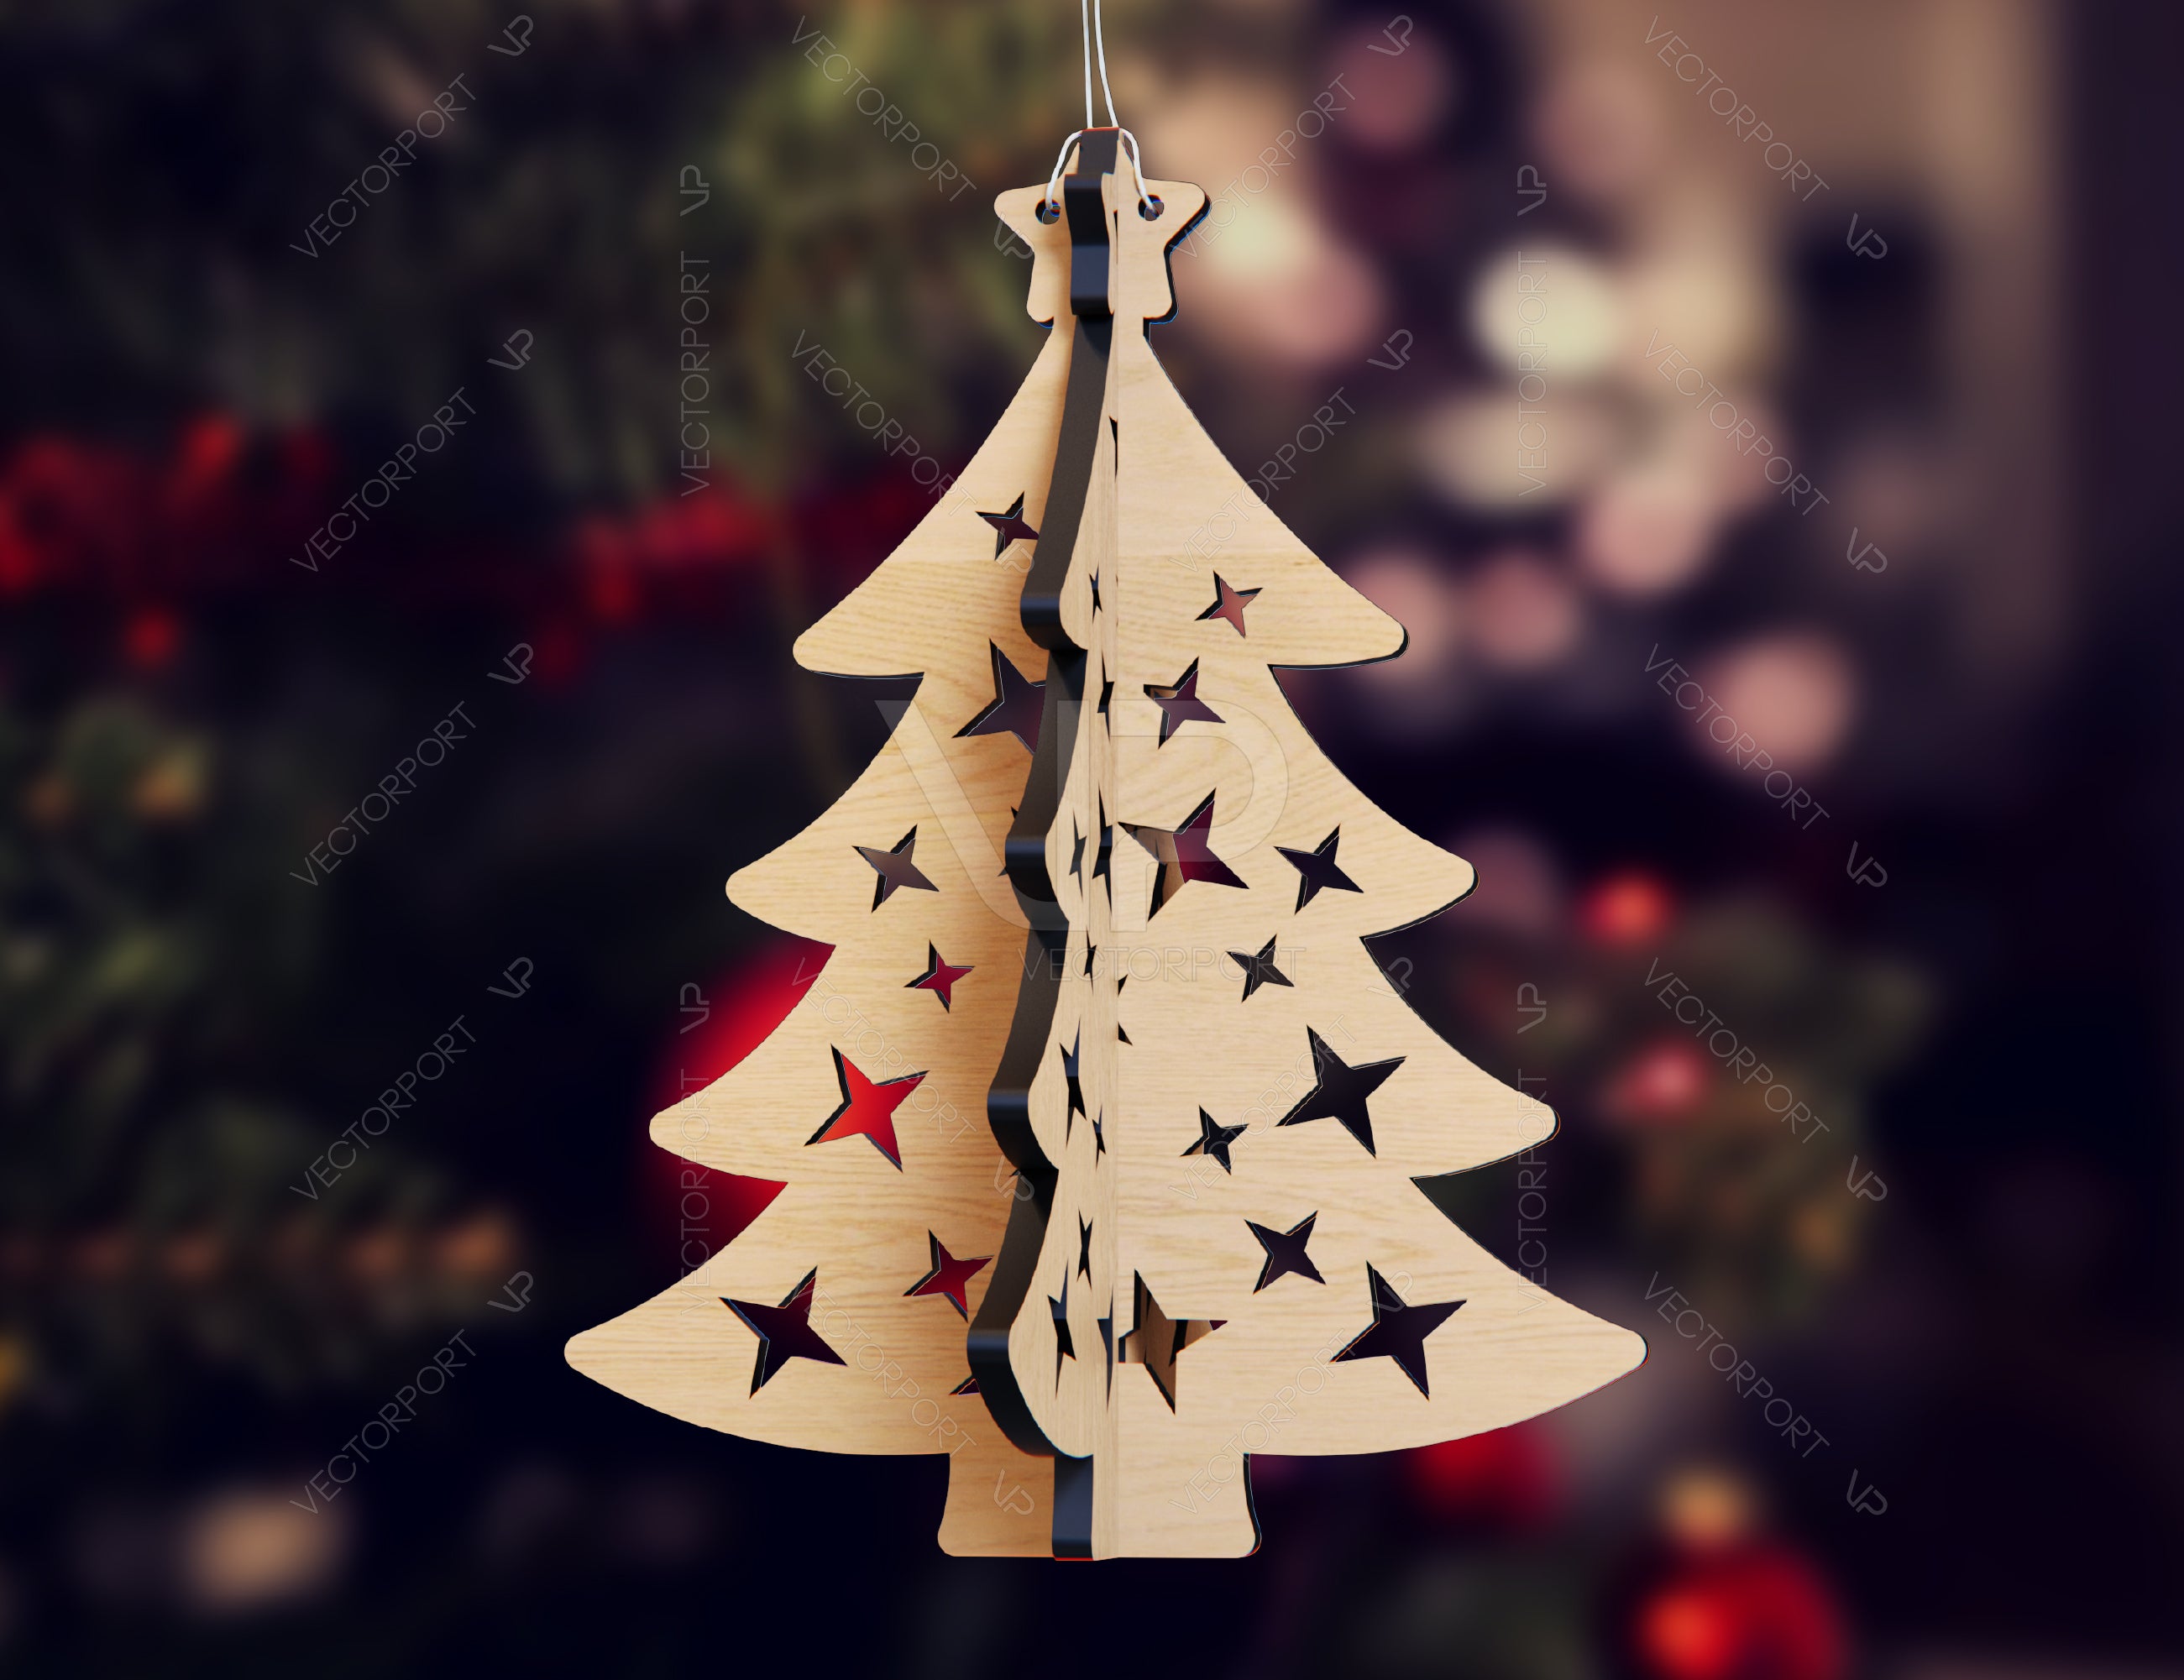 3D Christmas tree ornament décor Laser cut Snowflake SVG Craft templates Cricut Glowforge | SVG |#U089|